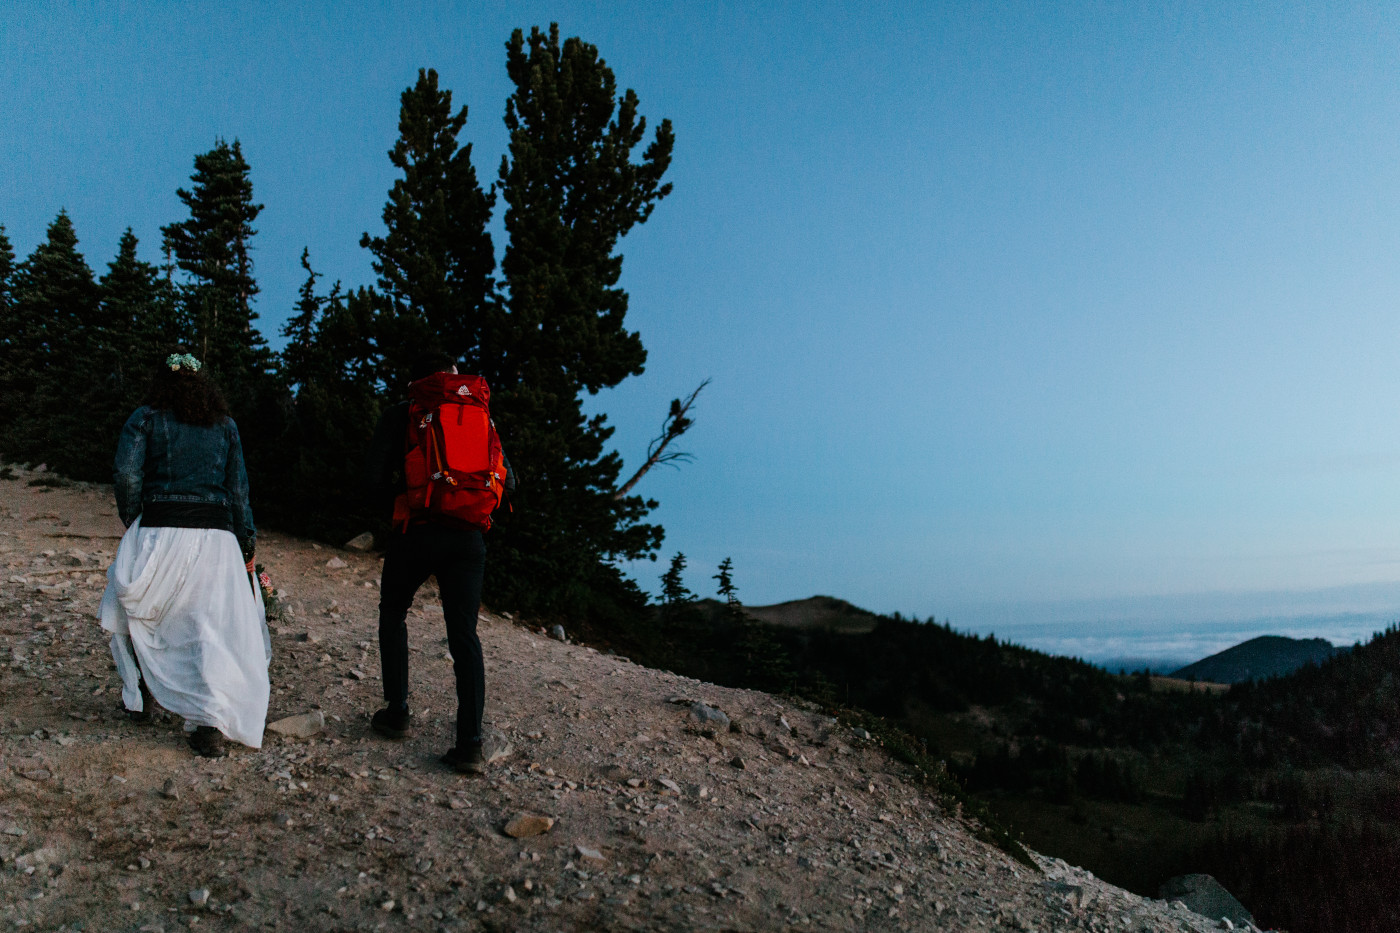 Tasha and Chad hiking. Elopement photography at Mount Rainier by Sienna Plus Josh.